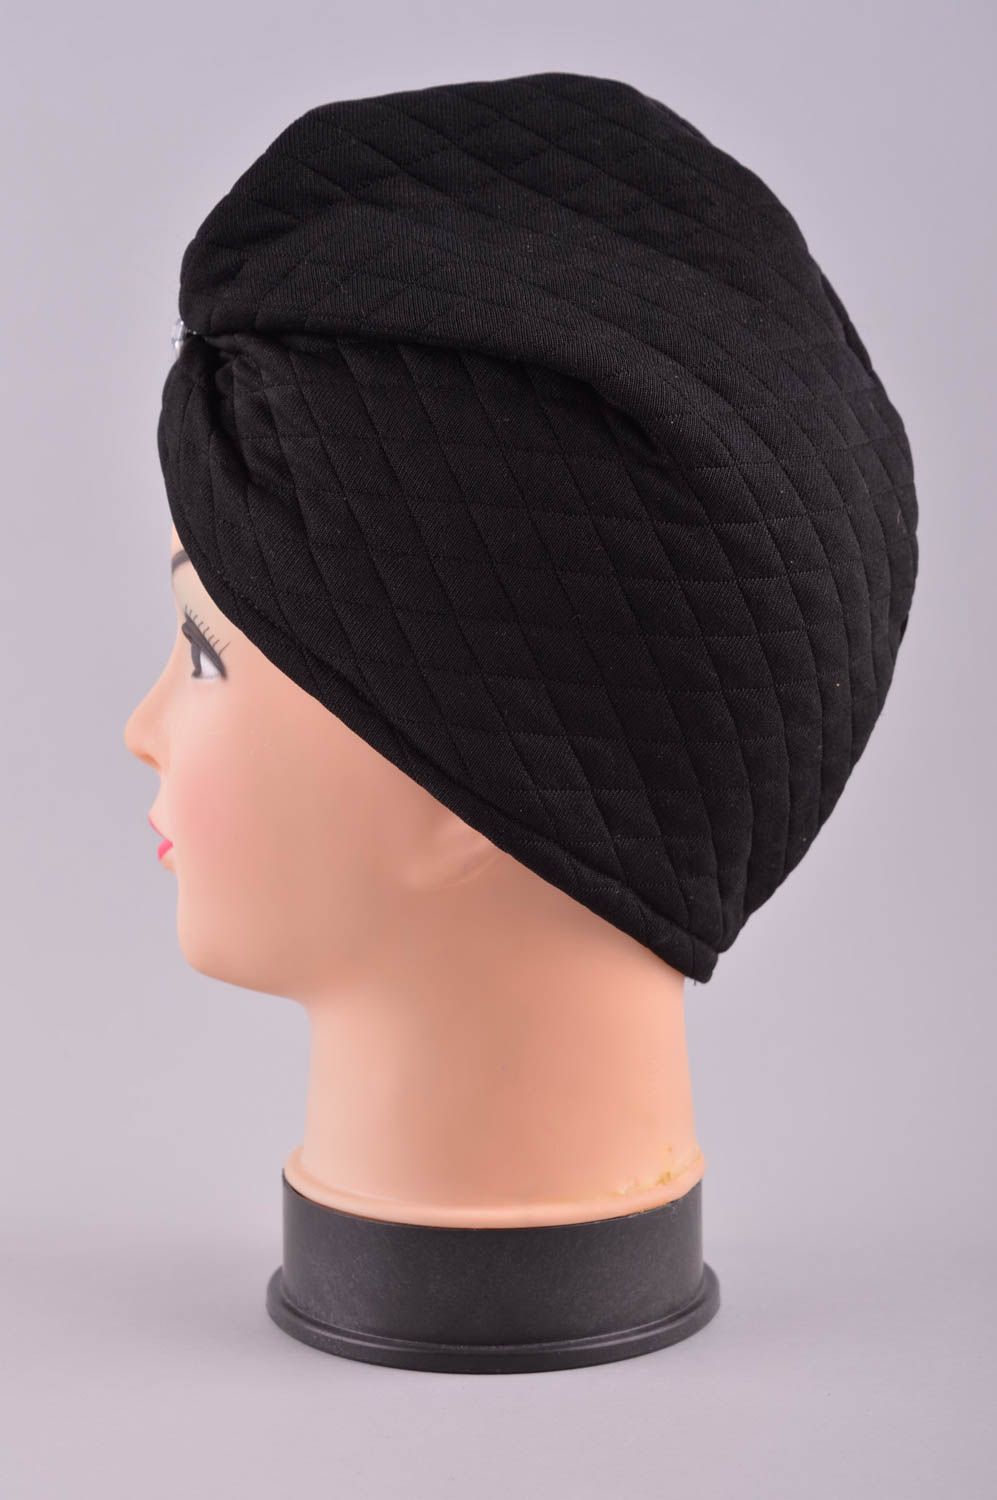 Handmade winter hat fabric hats black warm hat winter accessories for women photo 2